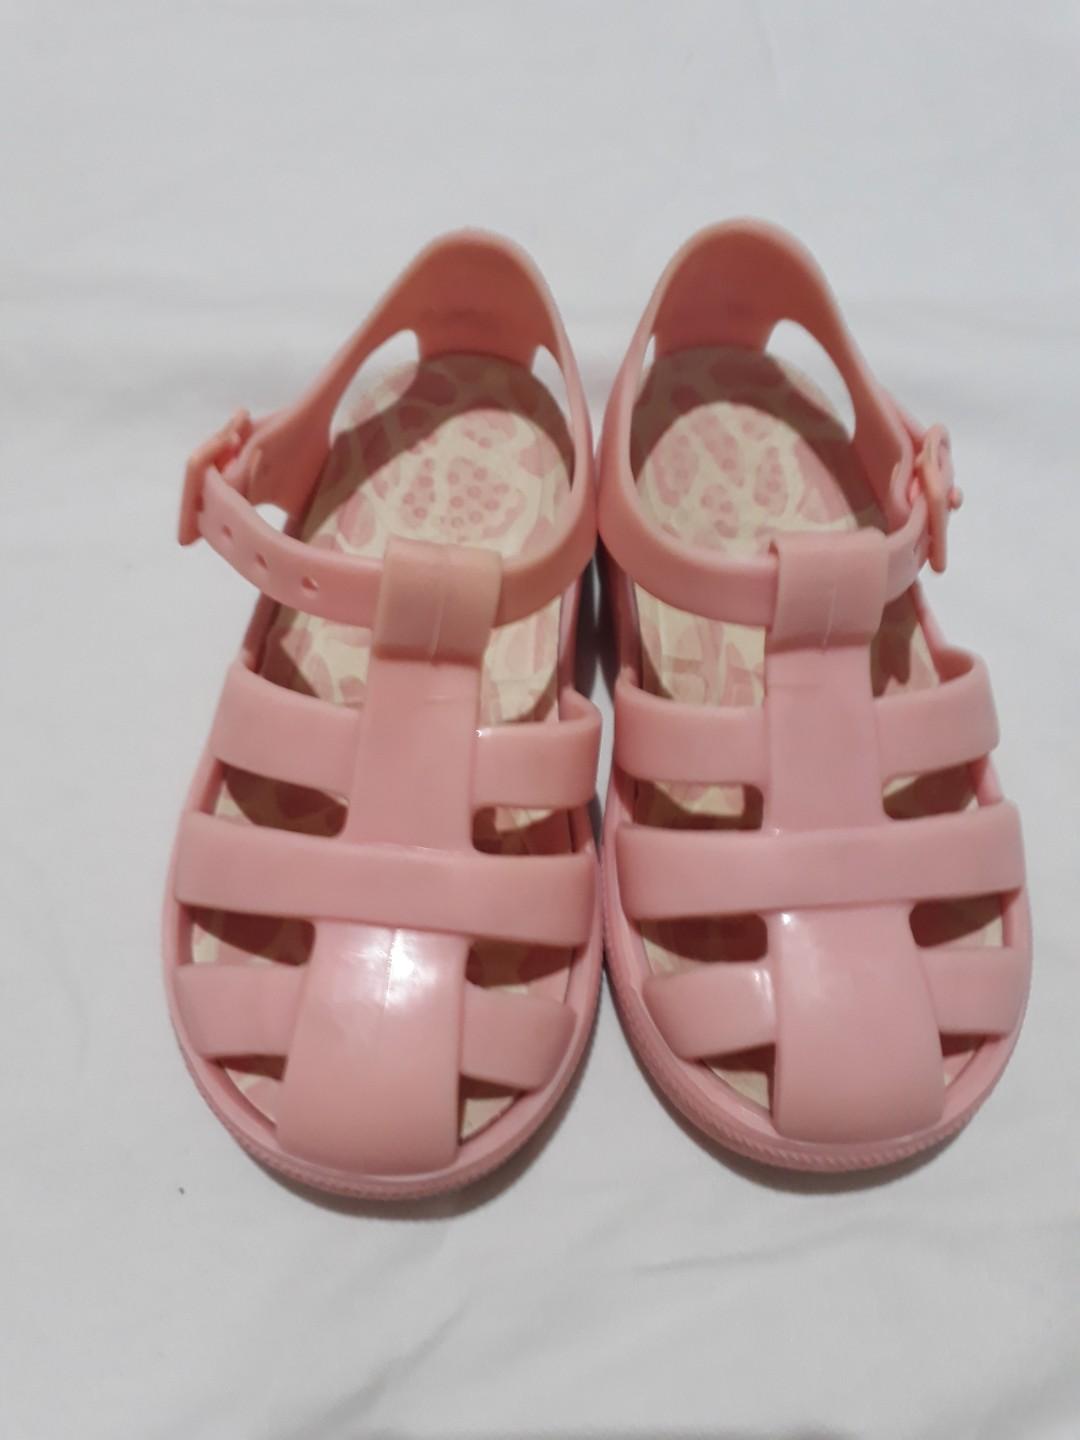 Zara jelly shoes, Babies \u0026 Kids, Babies 